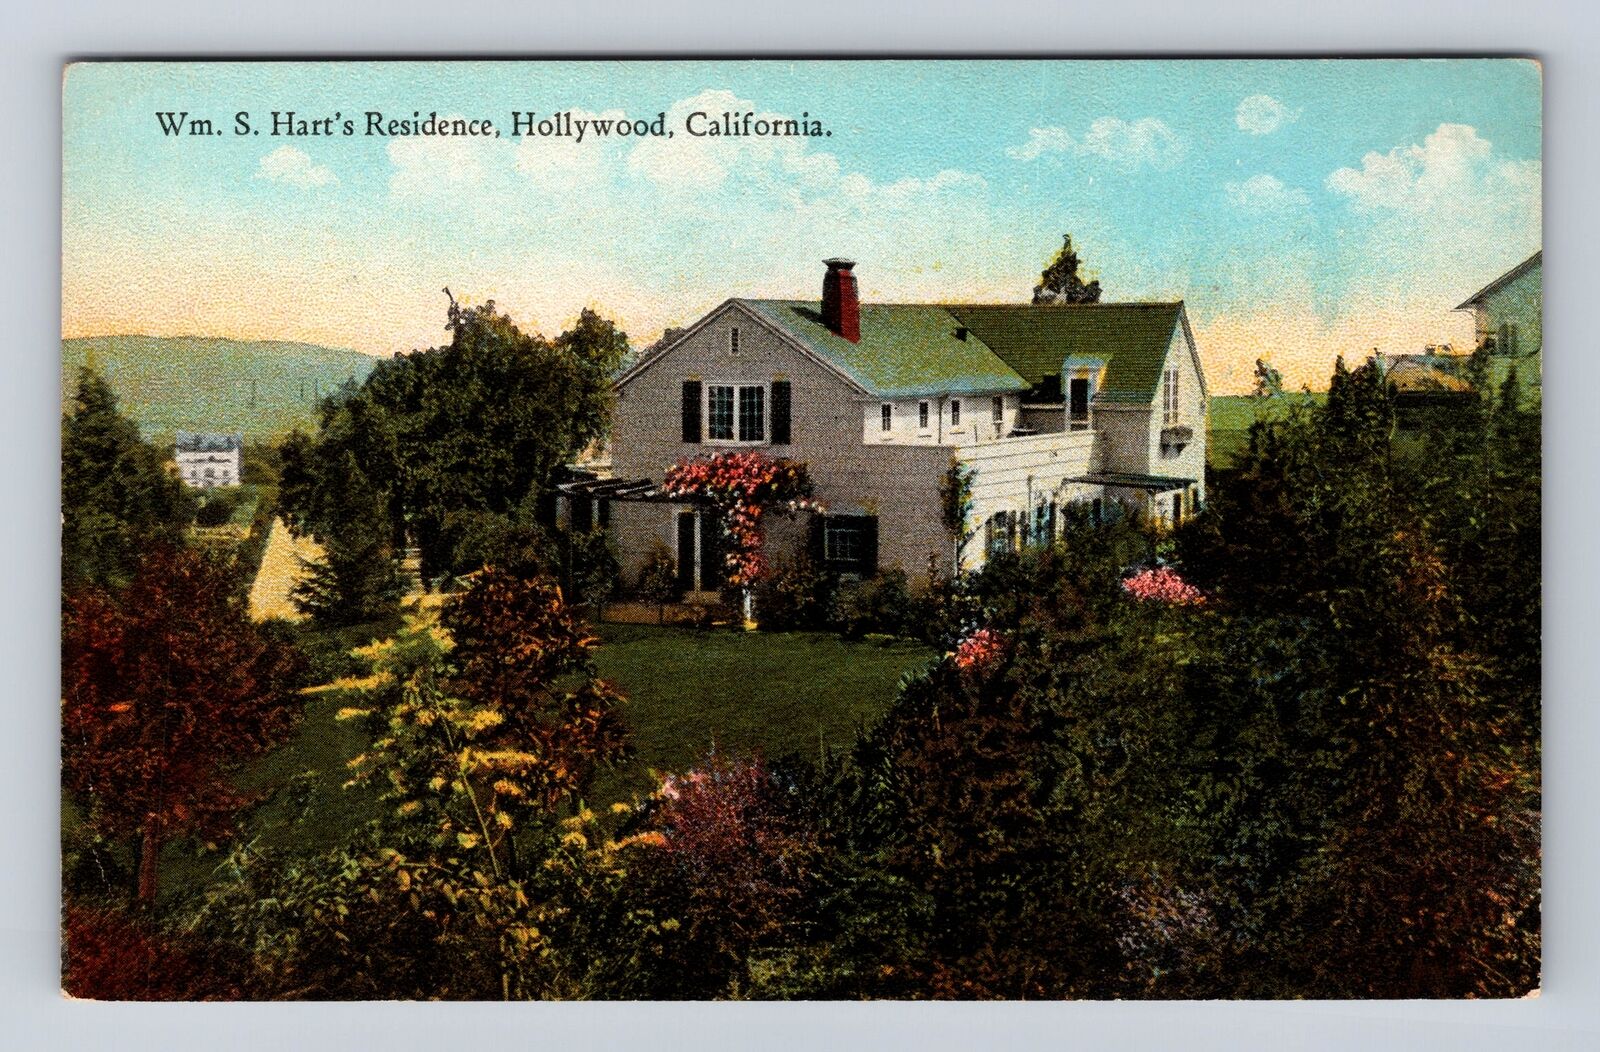 Hollywood CA-California, William S. Hart-Silent Film Actor-Home Vintage Postcard